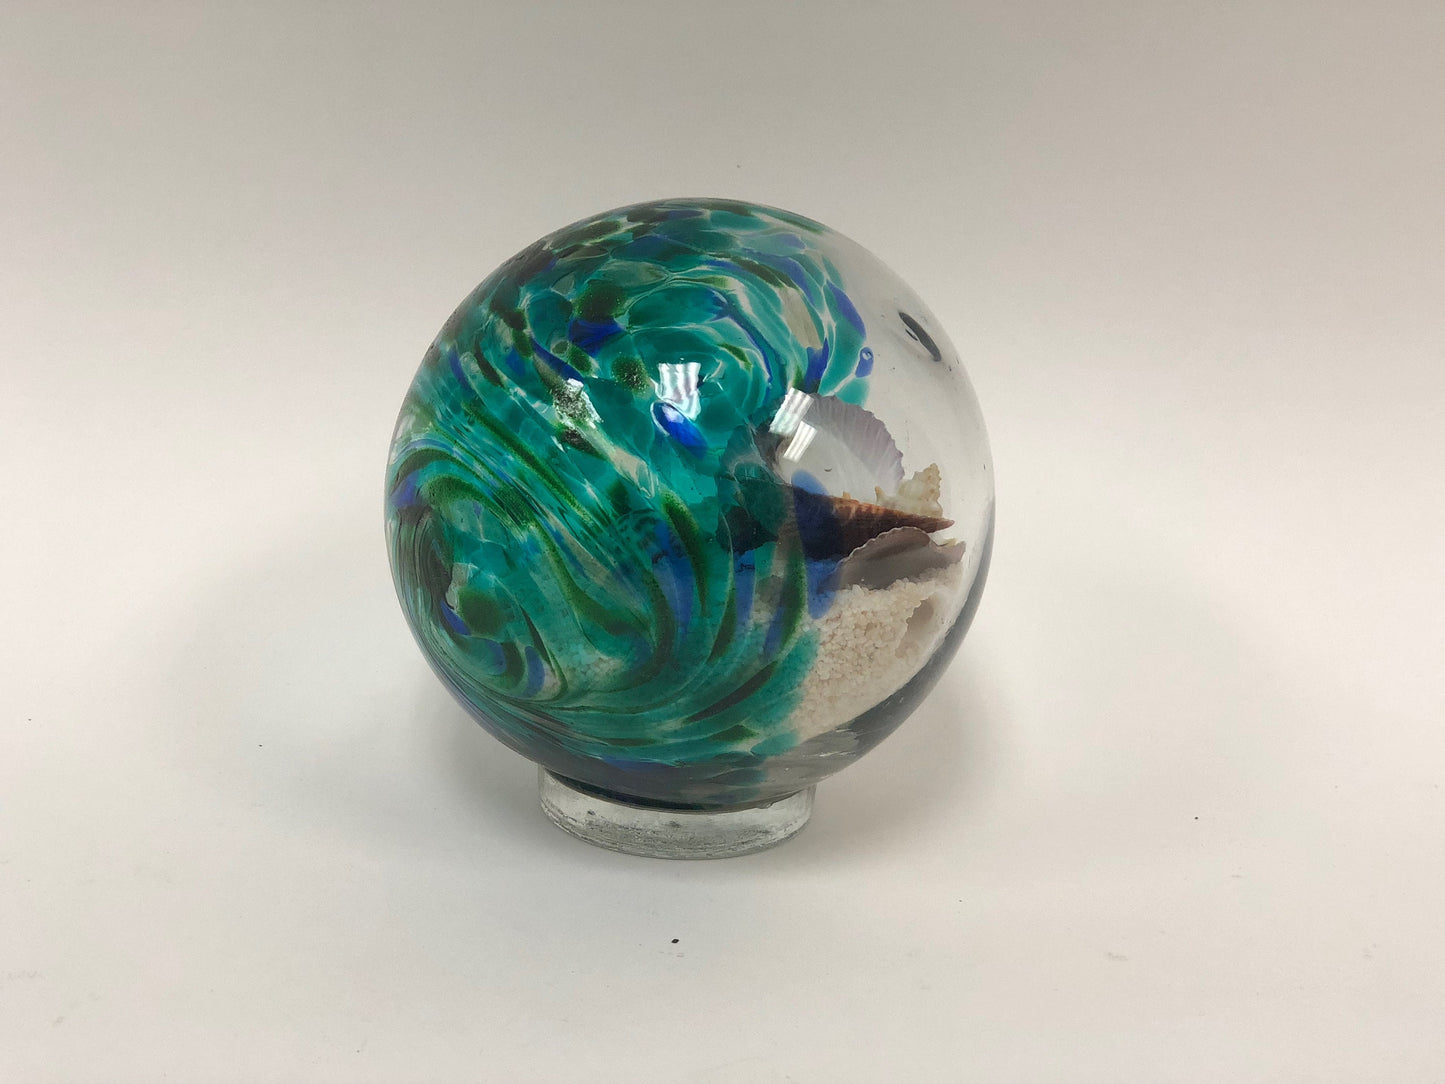 Free US Shipping~ 7" Lake Green Sea Globe Handblown Art Glass Decor Holiday Gift with natural sea shell and sand